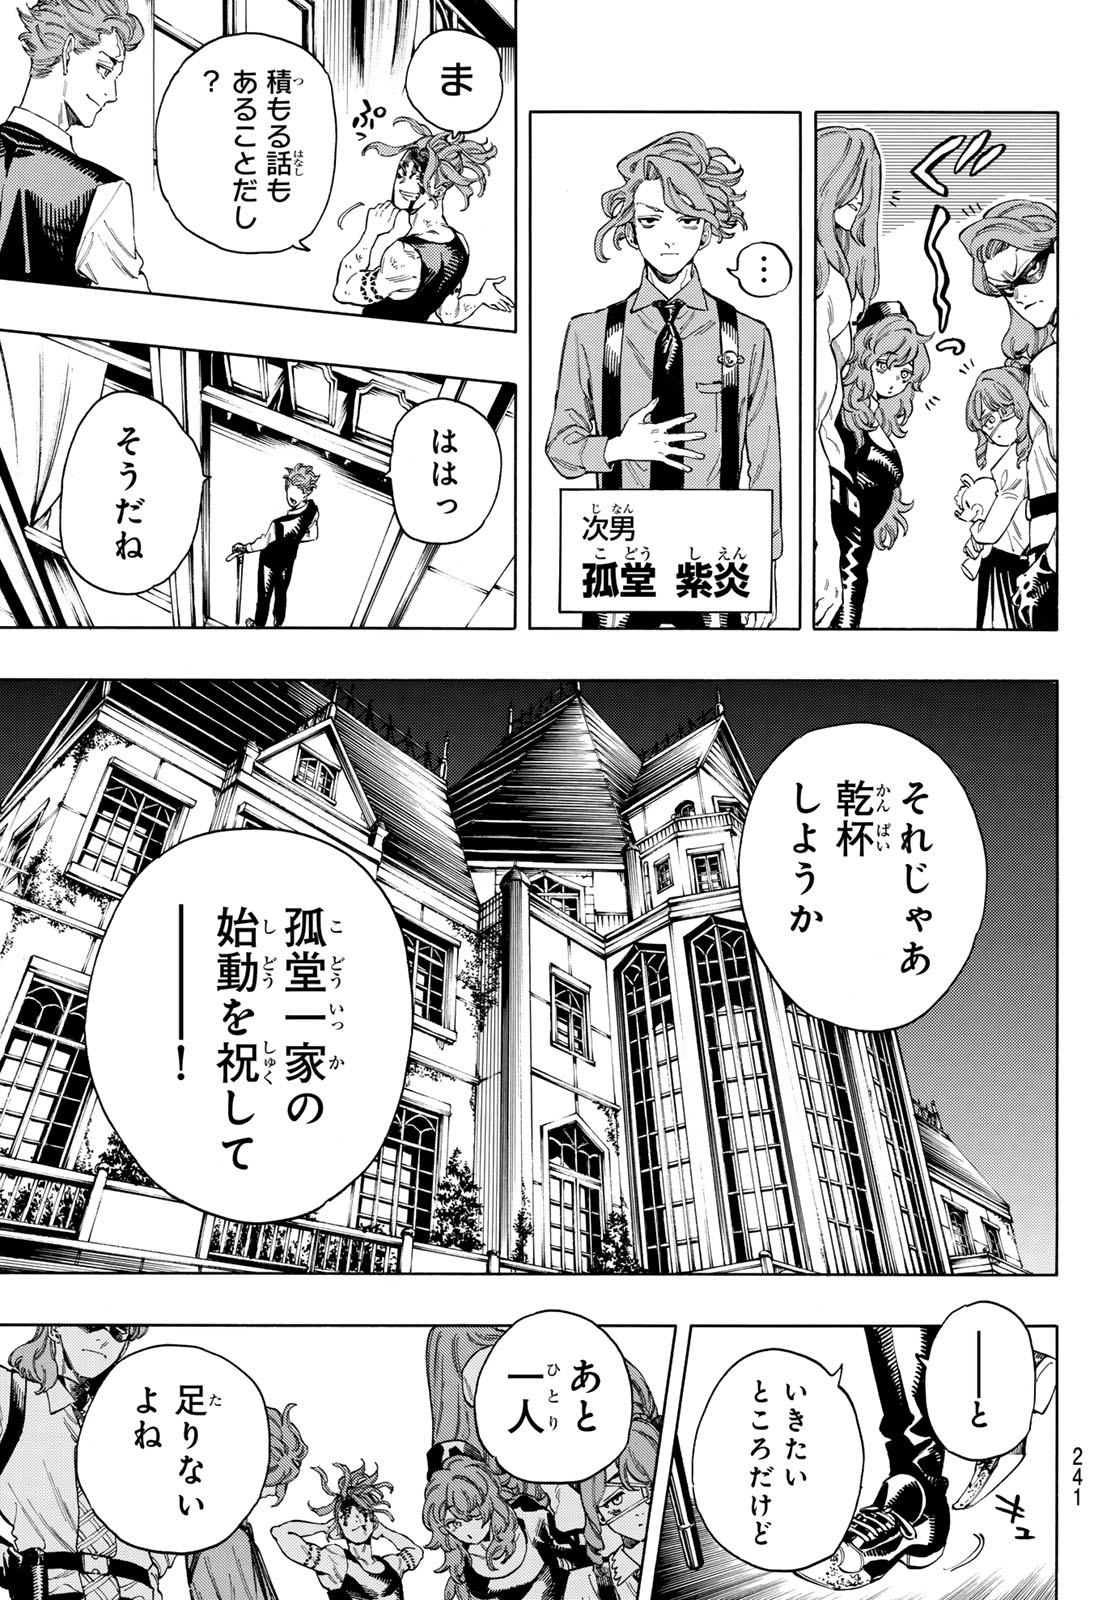 Akabane Honeko no Bodyguard - Chapter 66 - Page 19